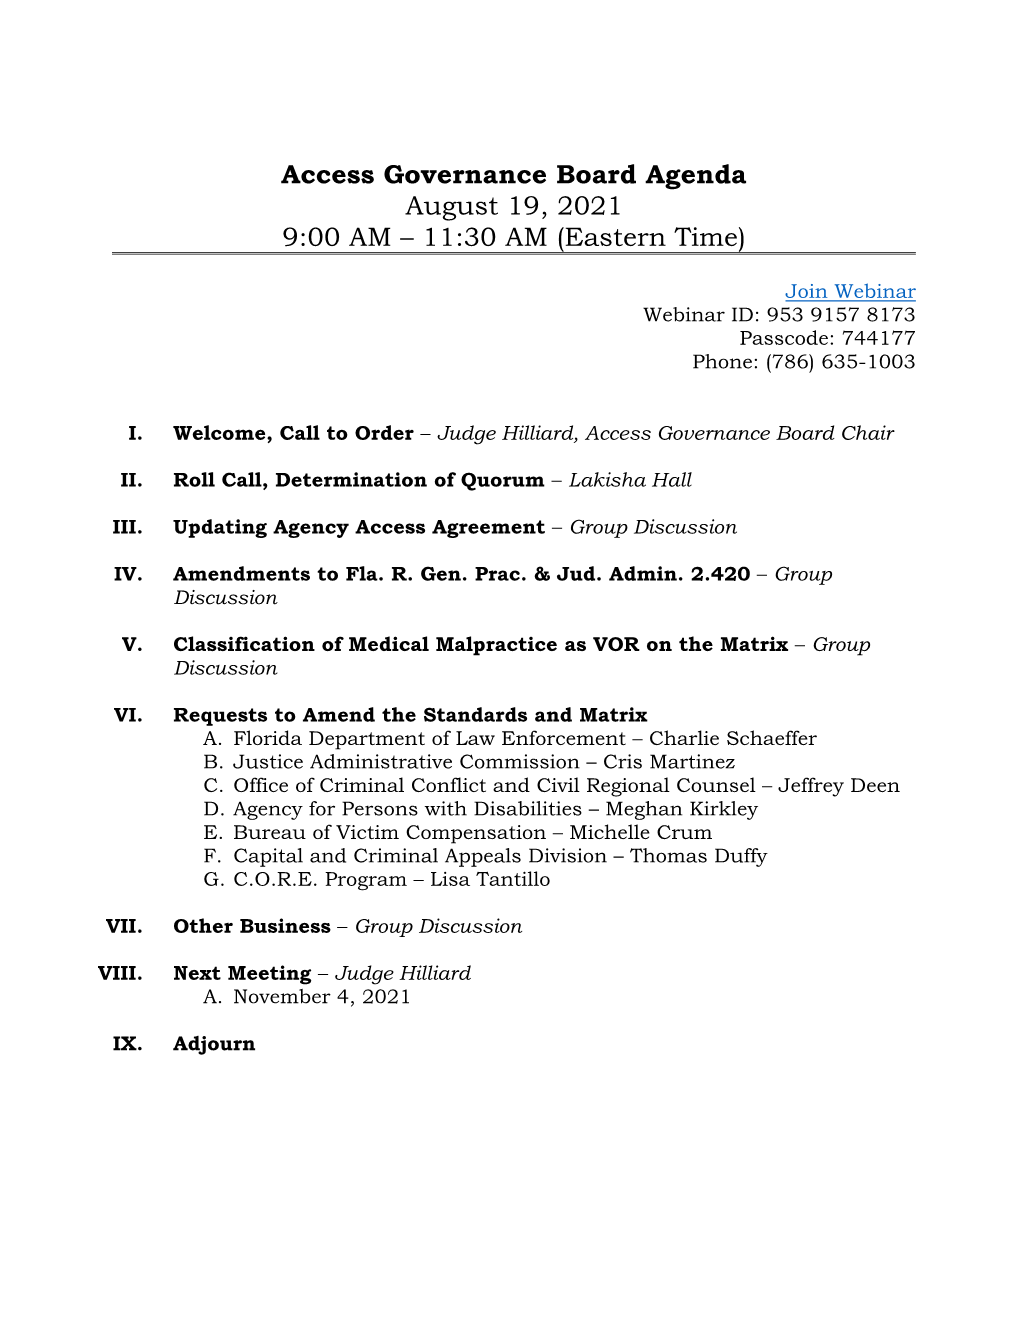 Access Governance Board Agenda August 19, 2021 9:00 AM – 11:30 AM (Eastern Time)